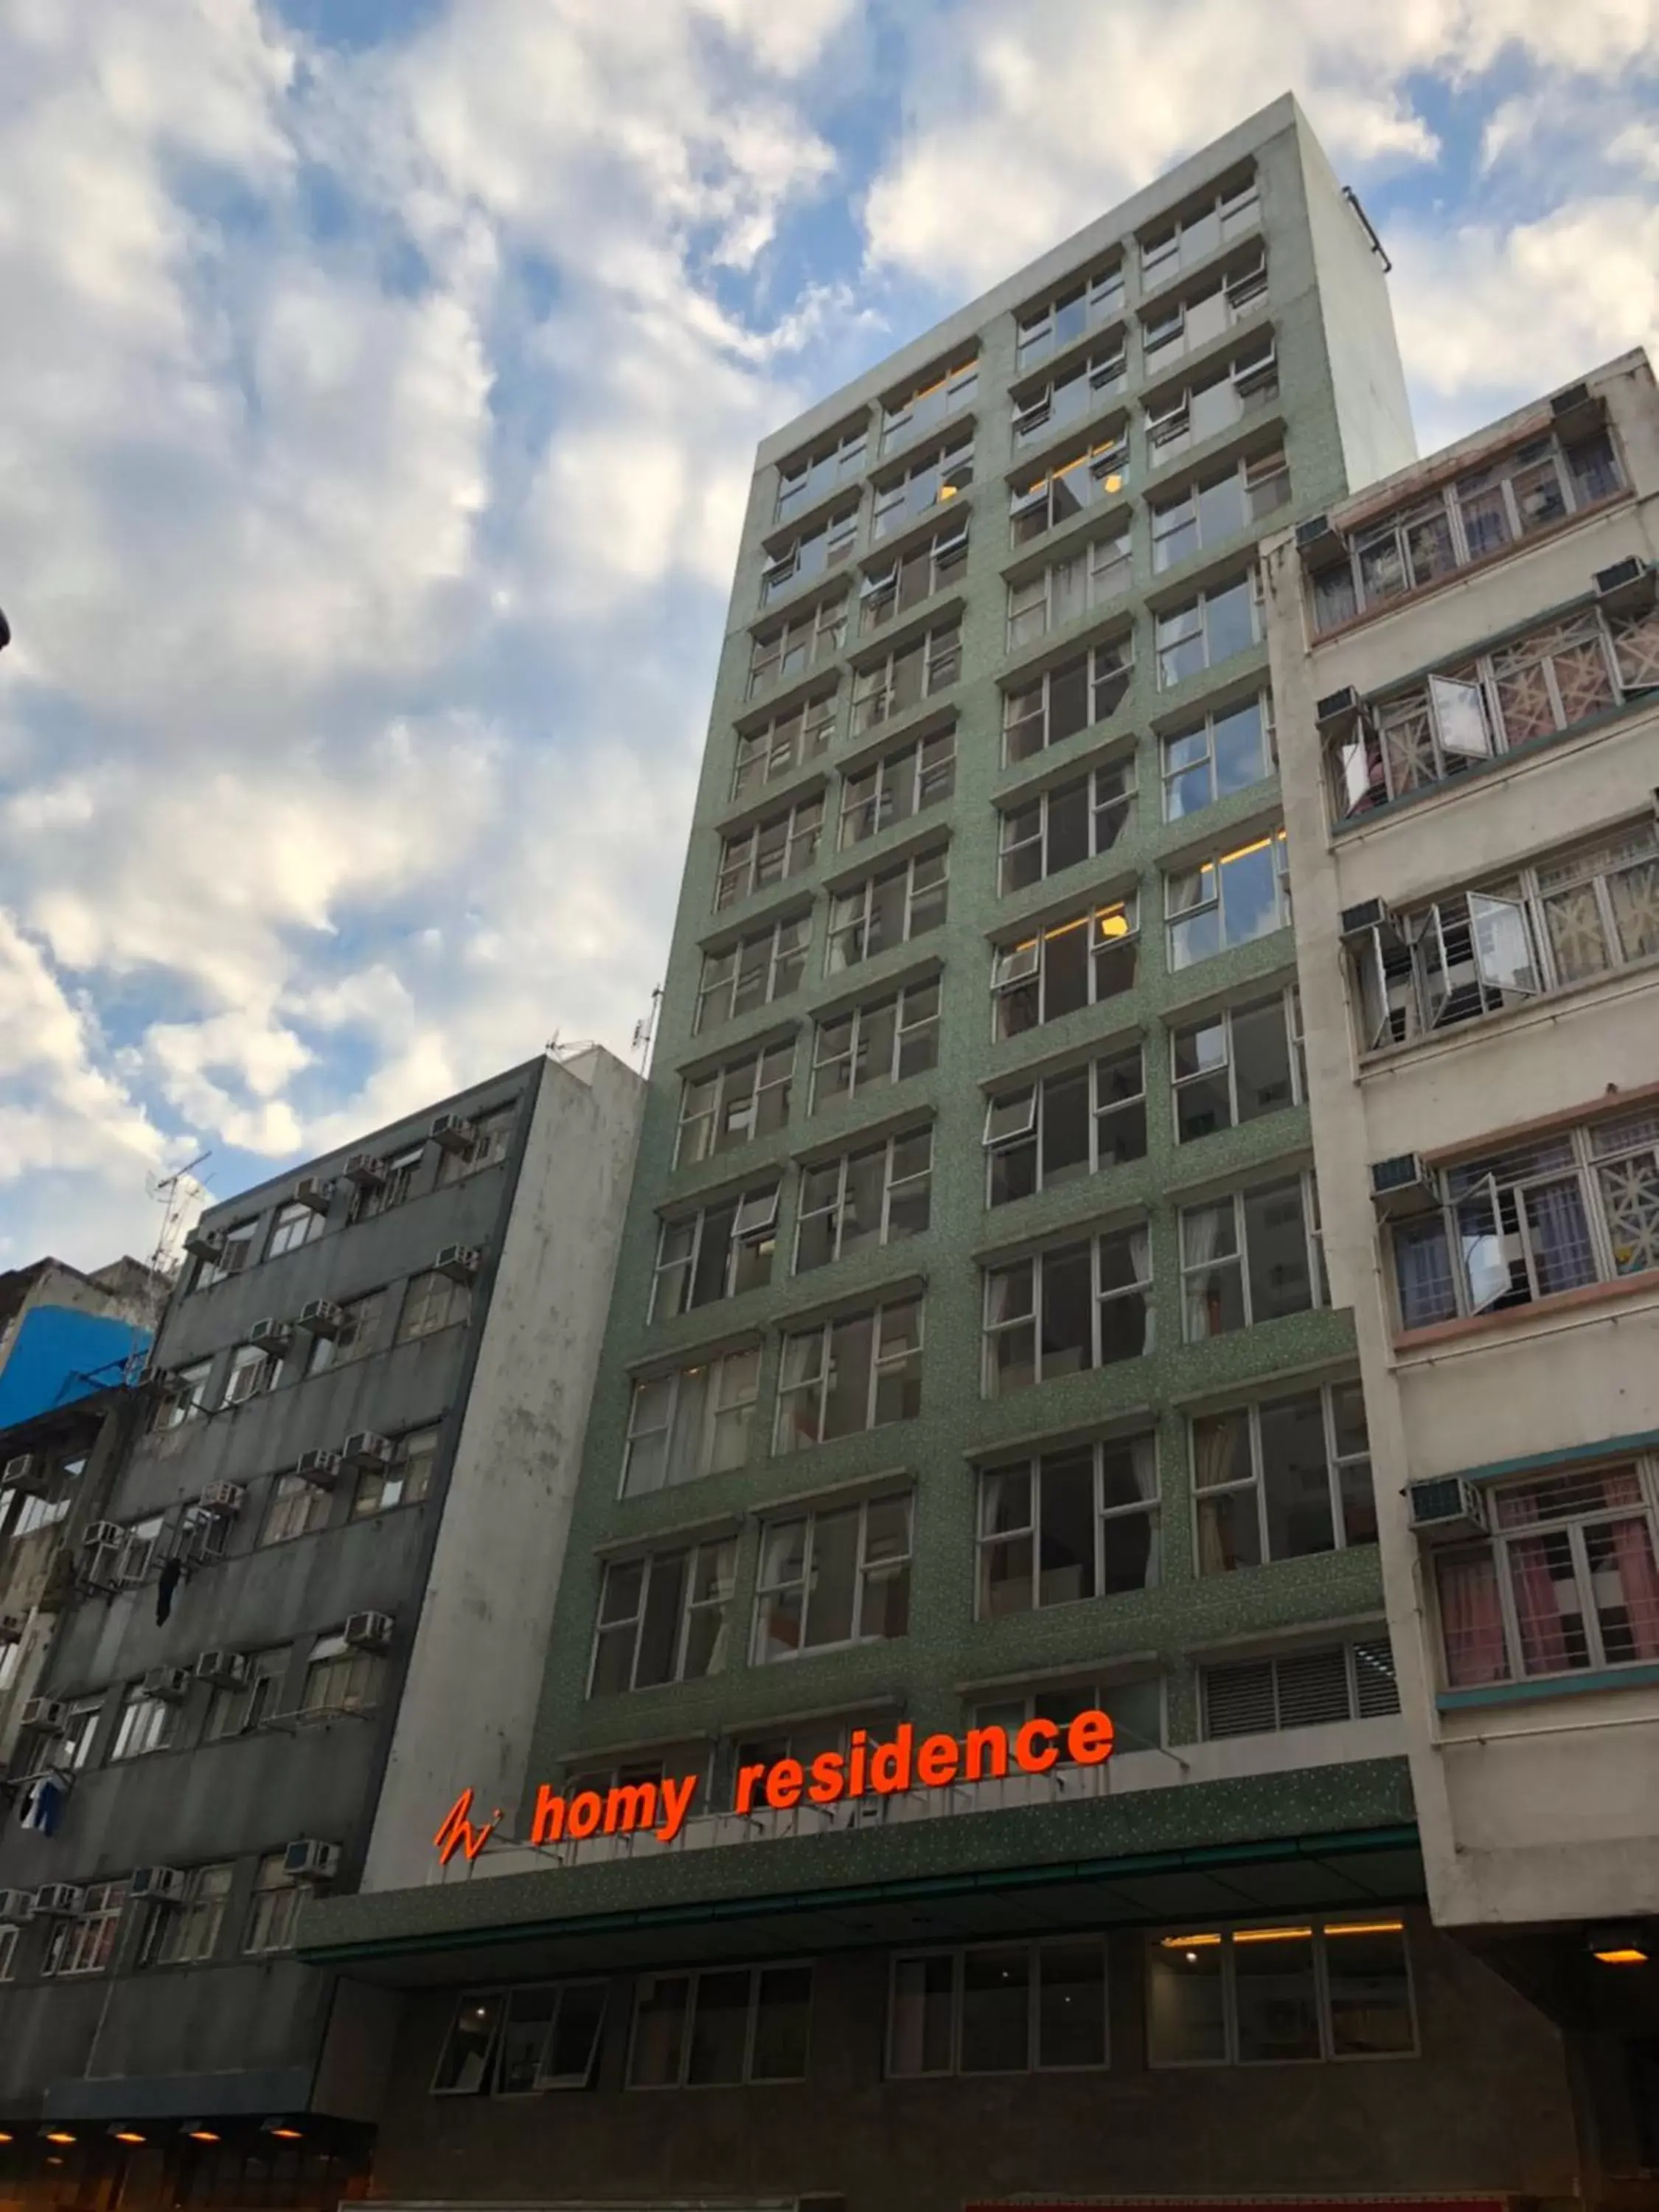 Property Building in Homy Residence